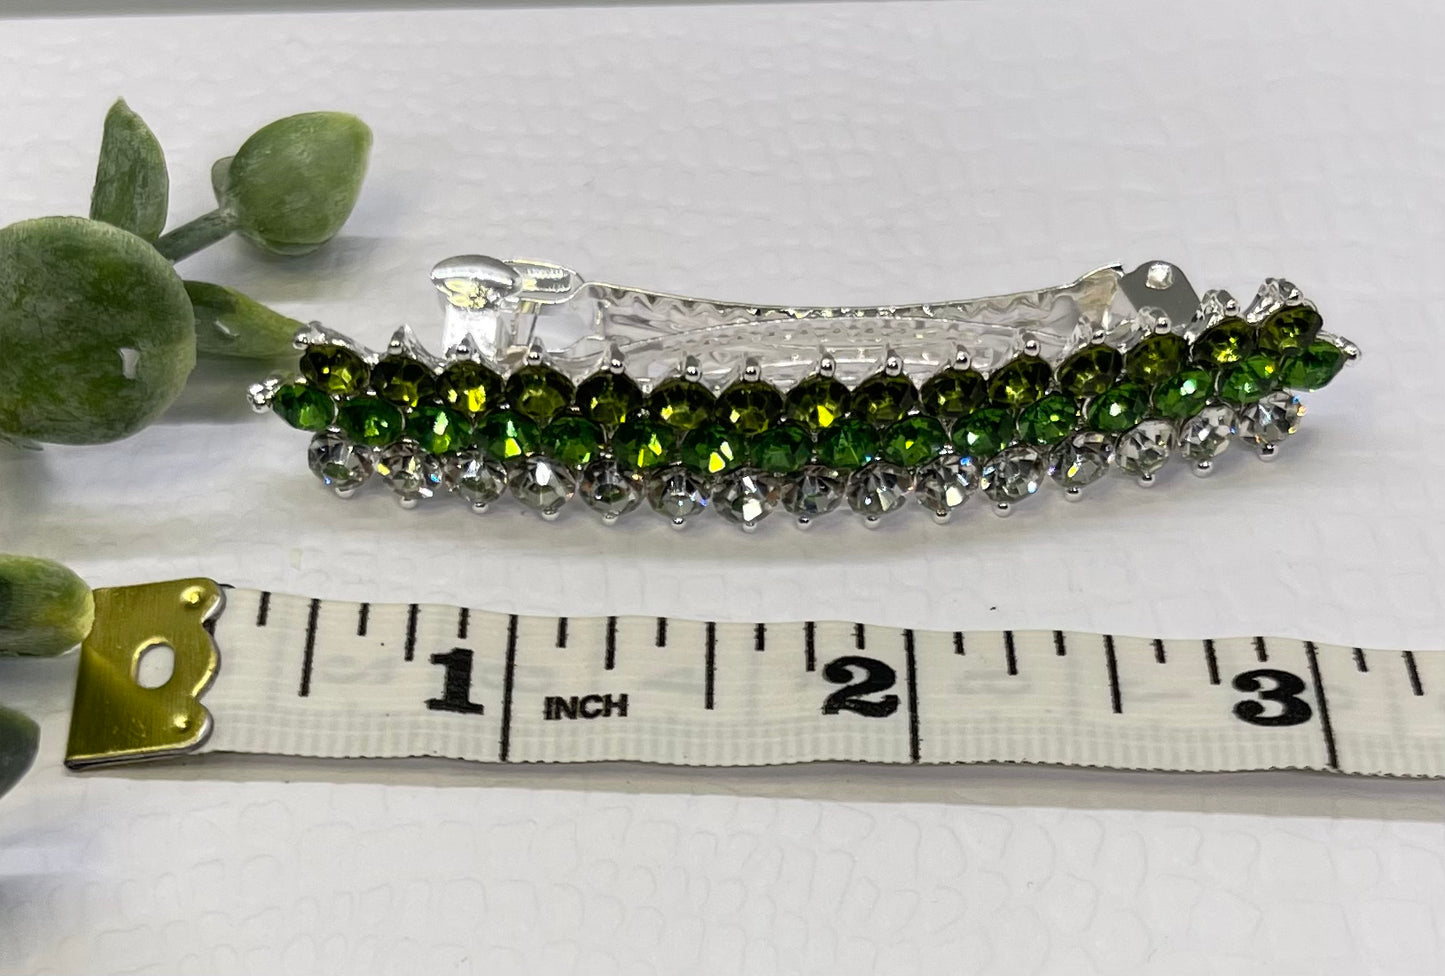 Green Crystal rhinestone barrette approximately 3.0” silver tone formal hair accessories gift wedding bridesmaid